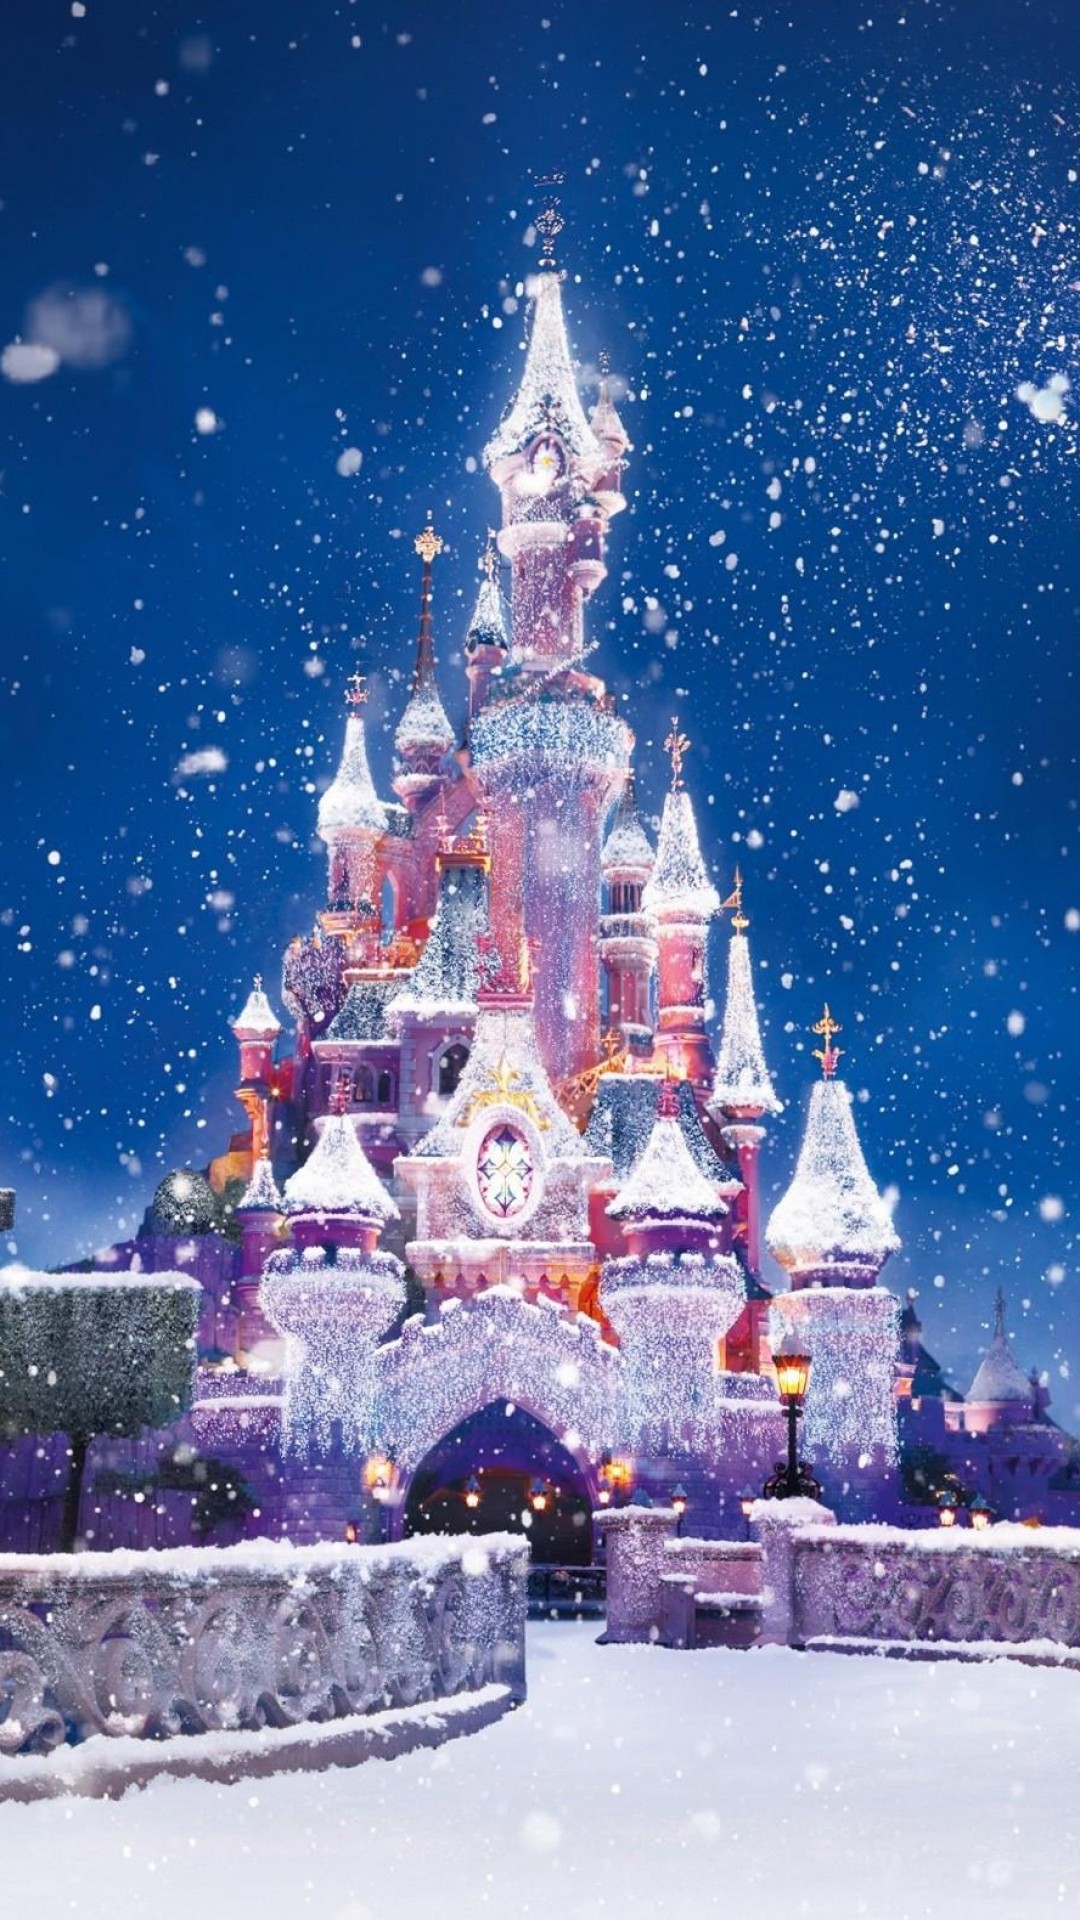 1080x1920 Disney Castle Christmas Lights Snow Android Wallpaper.jpg